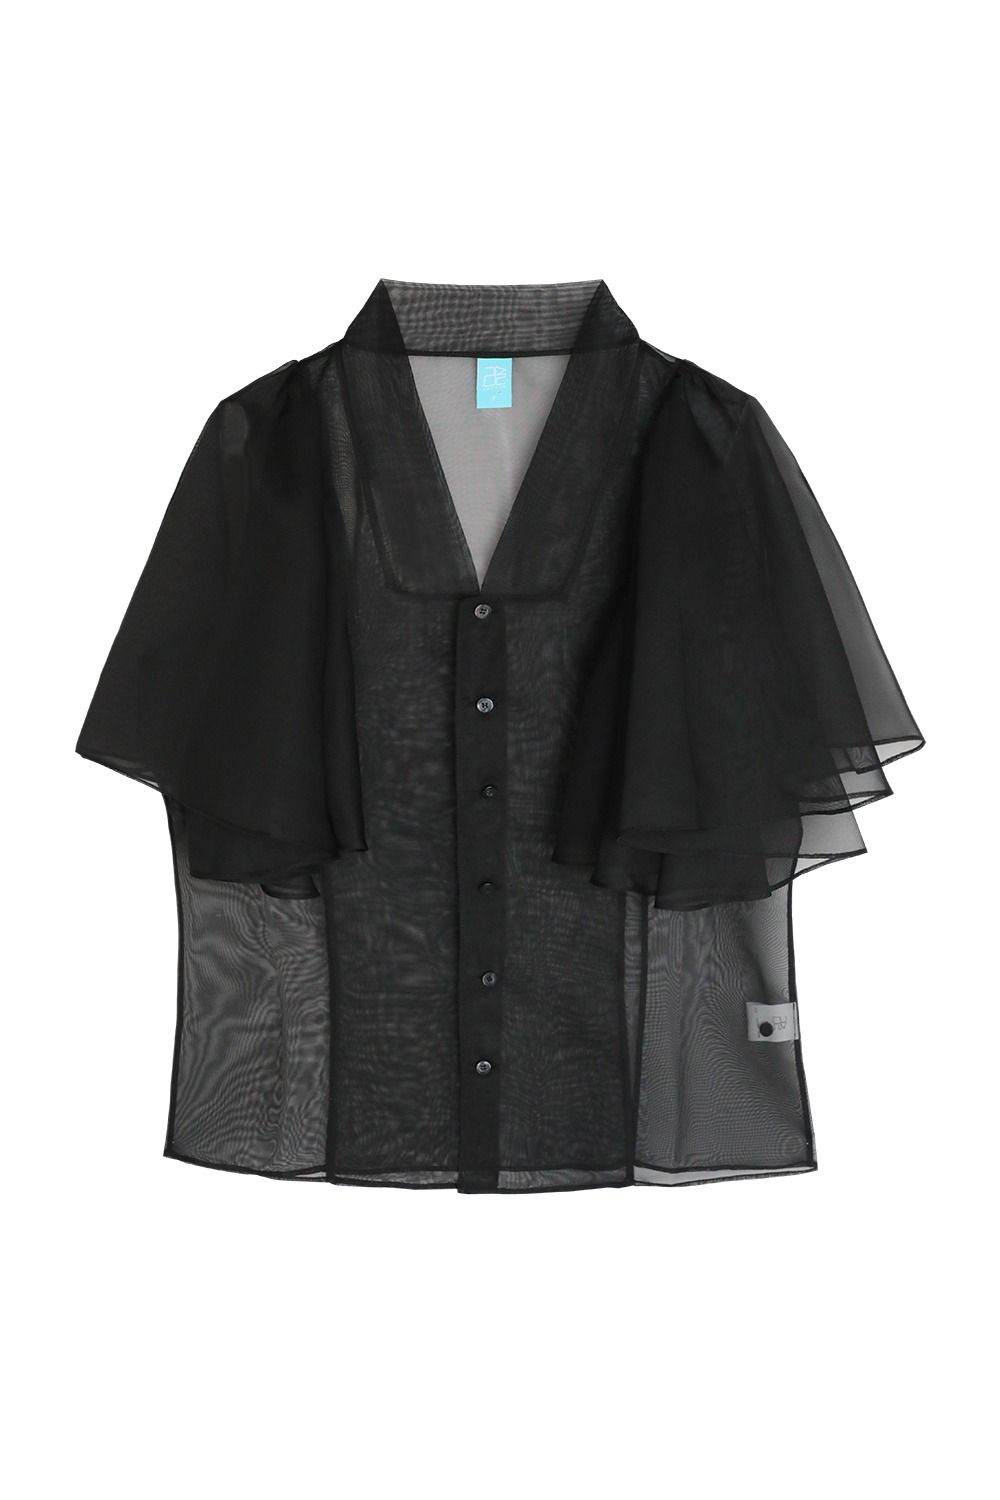 Gangneung Kim wing sleeve blouse [Black]